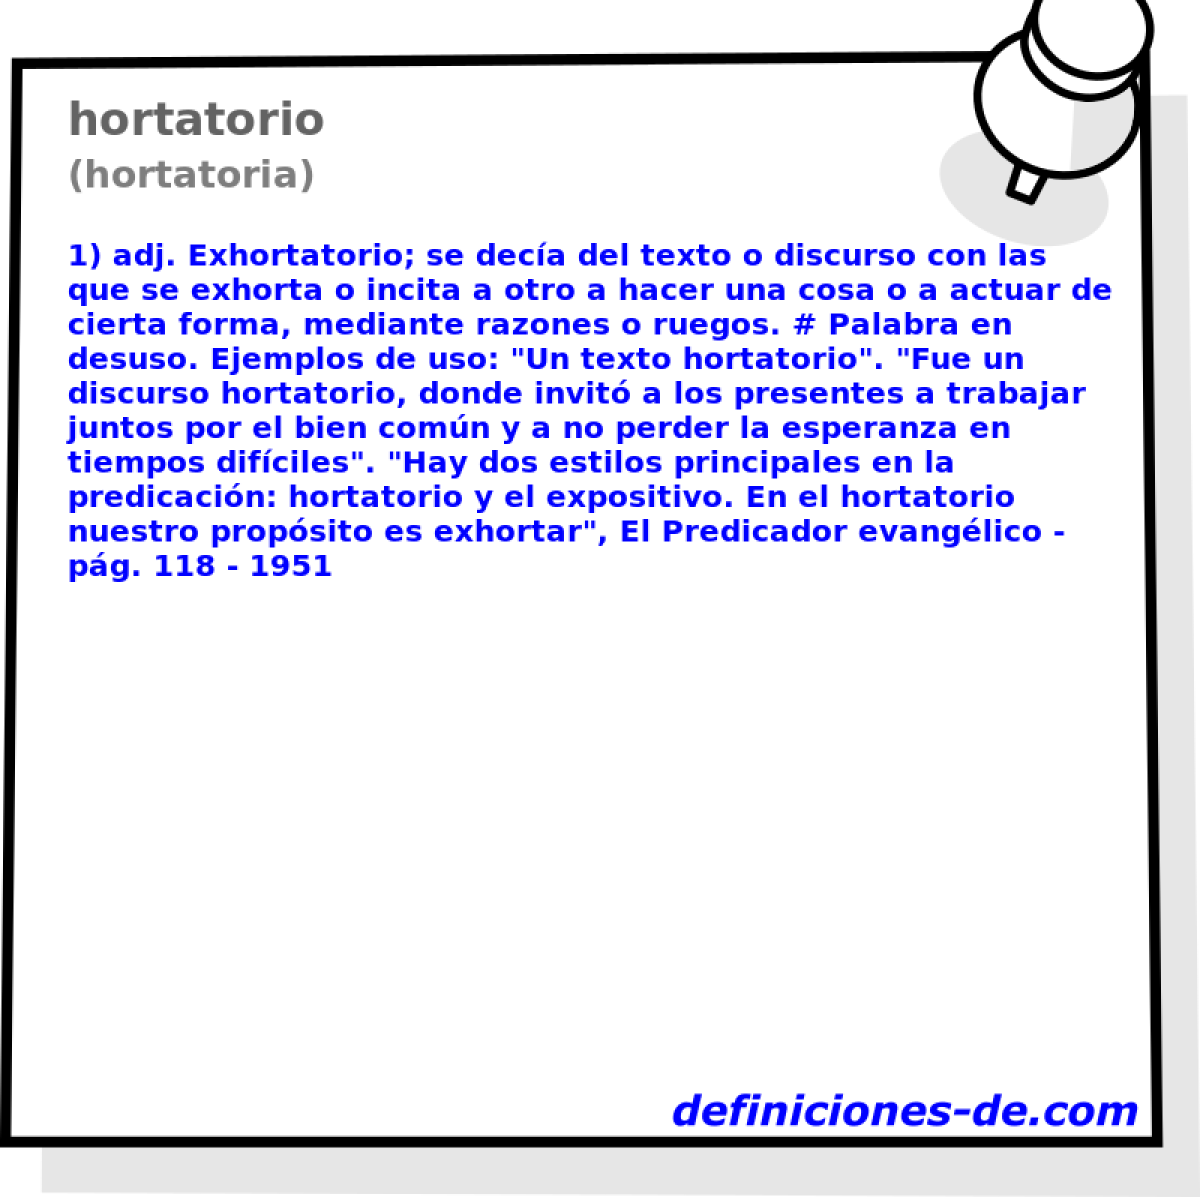 hortatorio (hortatoria)